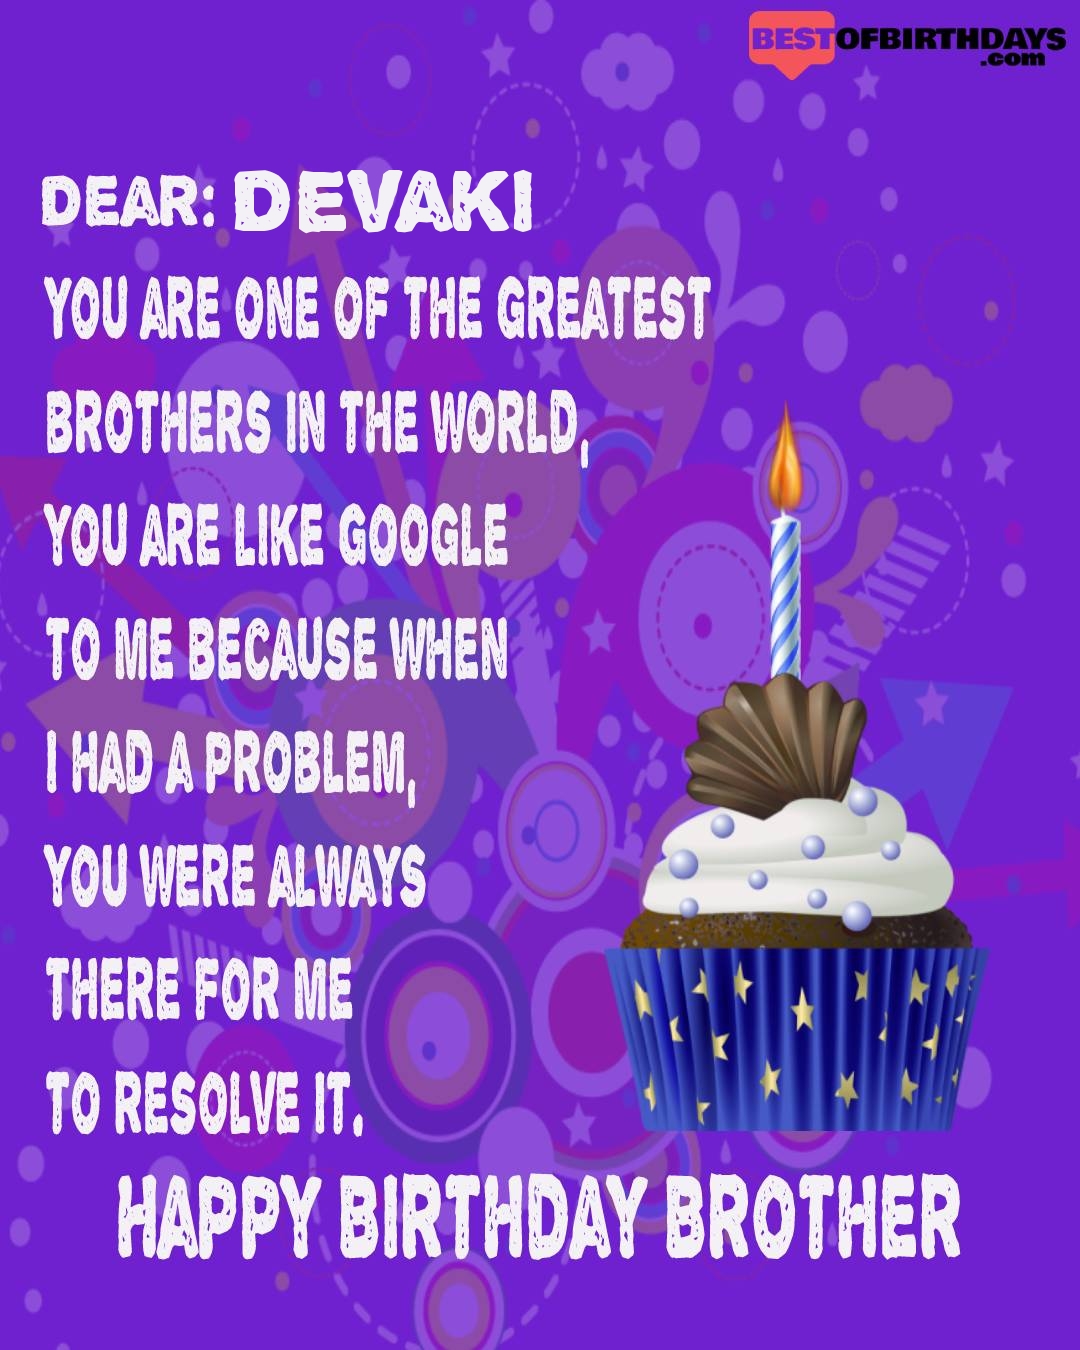 Happy birthday devaki bhai brother bro